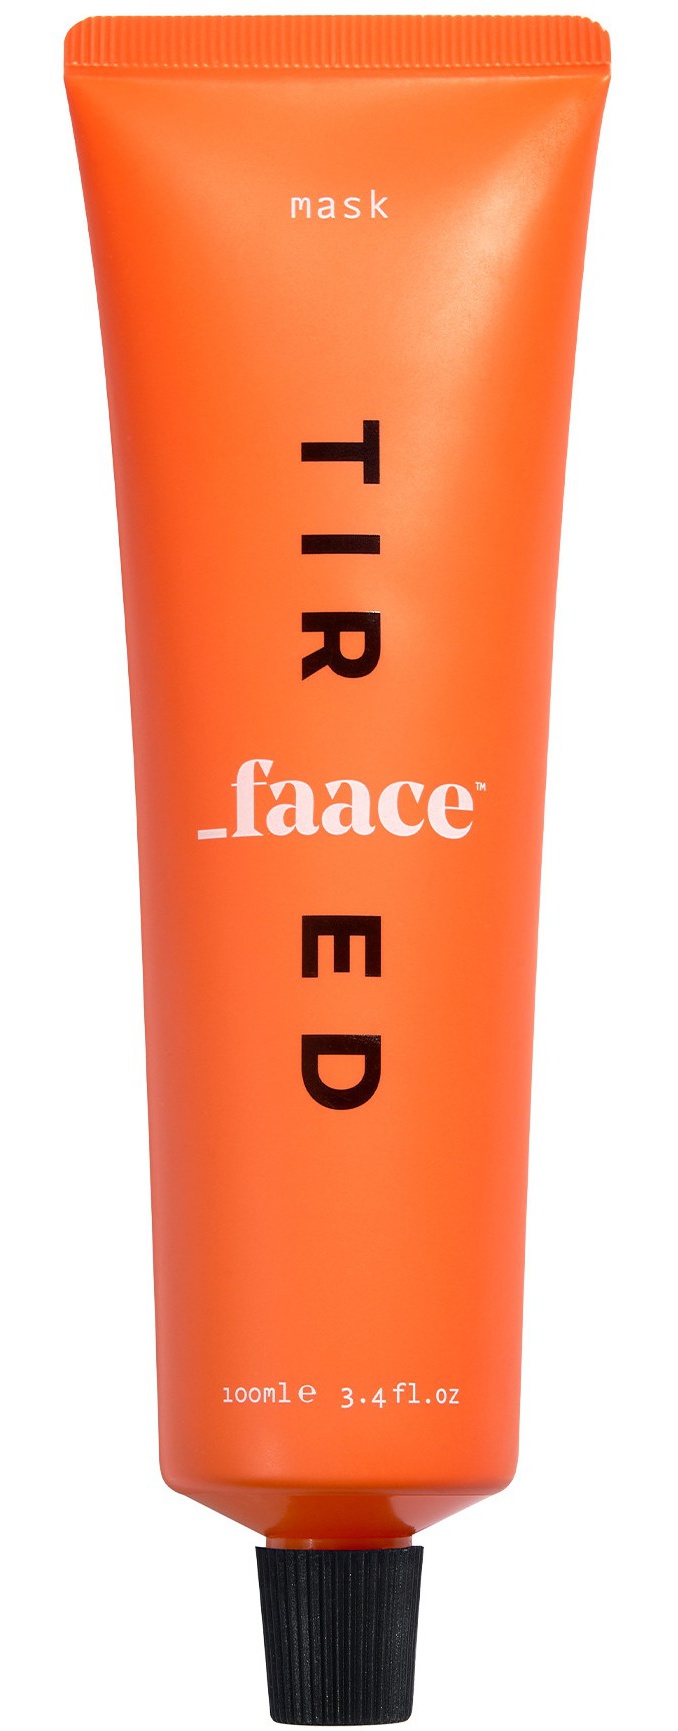 Faace Tired Faace Gel Face Mask